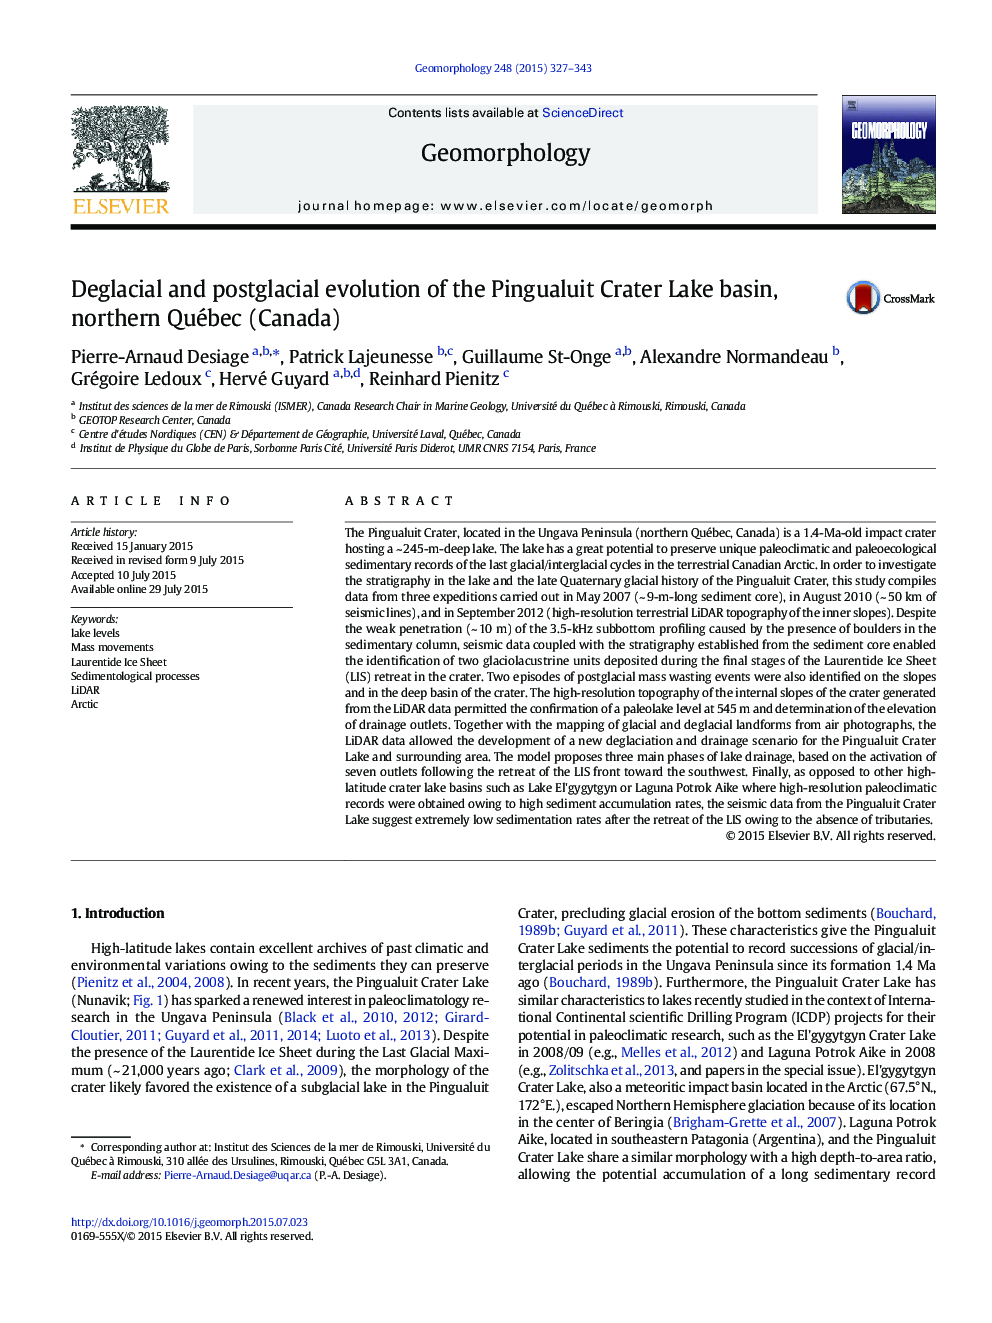 Deglacial and postglacial evolution of the Pingualuit Crater Lake basin, northern Québec (Canada)